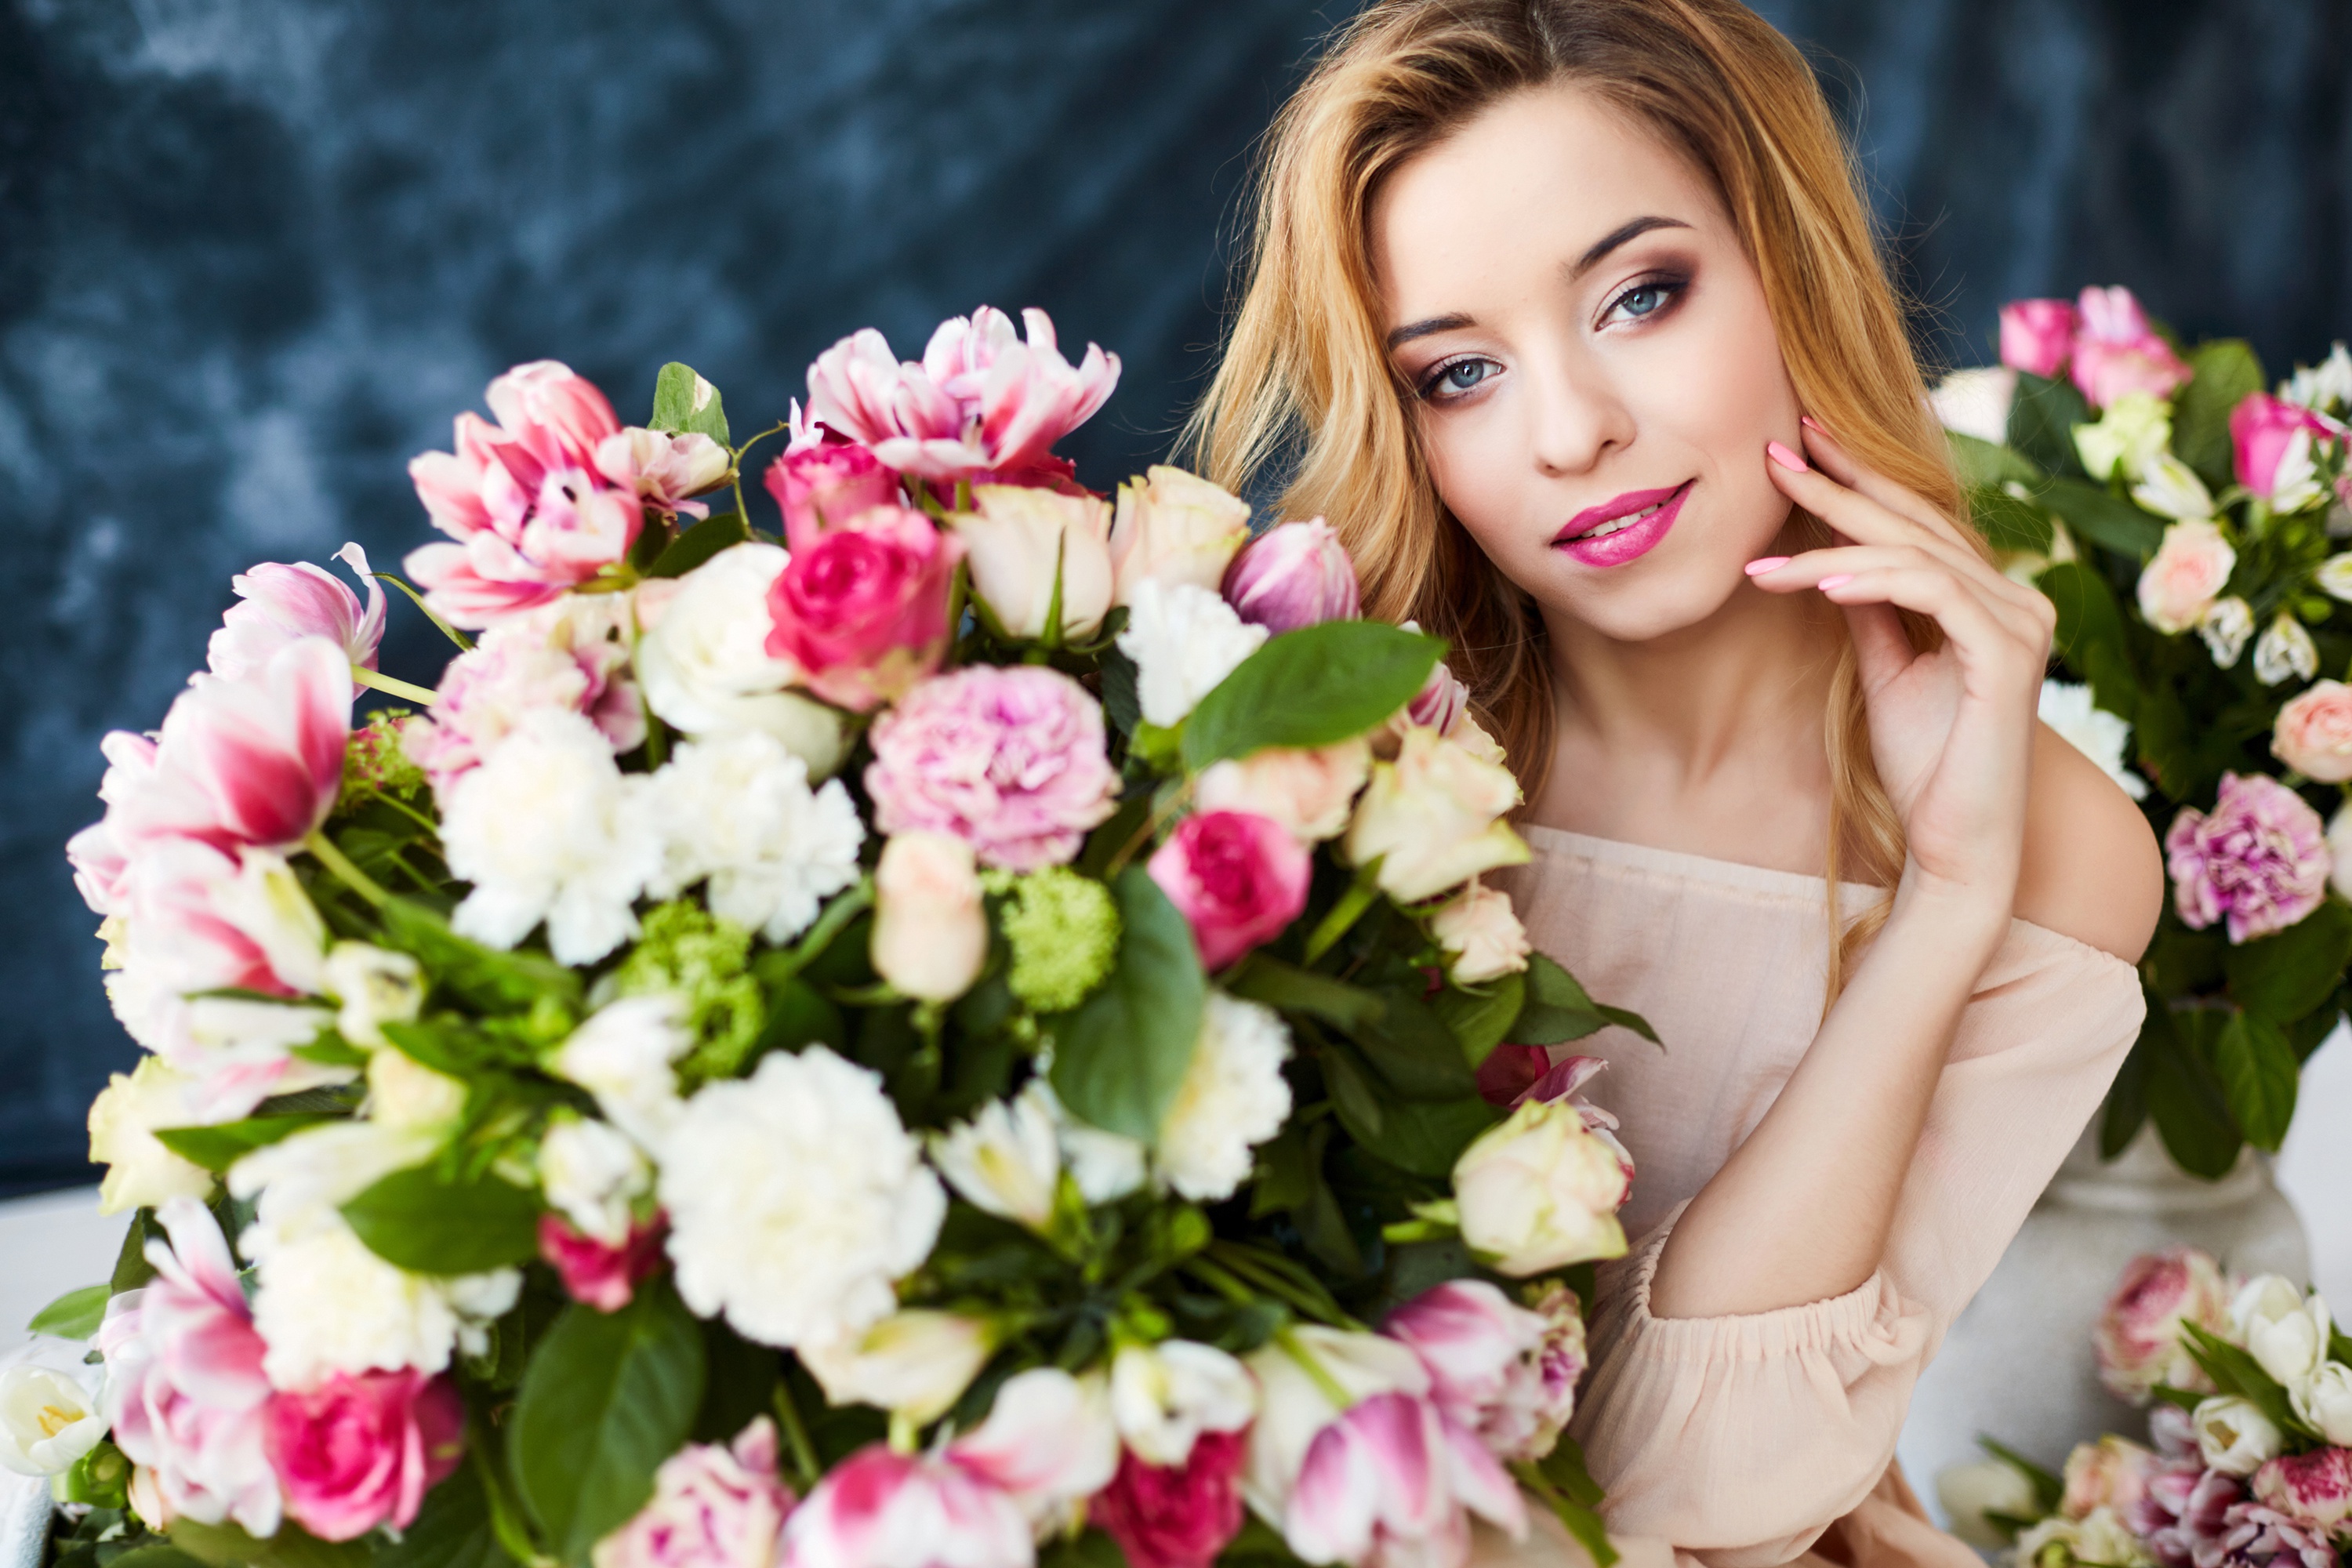 Woman Girl Smile Lipstick Blonde Blue Eyes Flower Rose Bouquet White Flower Pink Flower 3000x2000